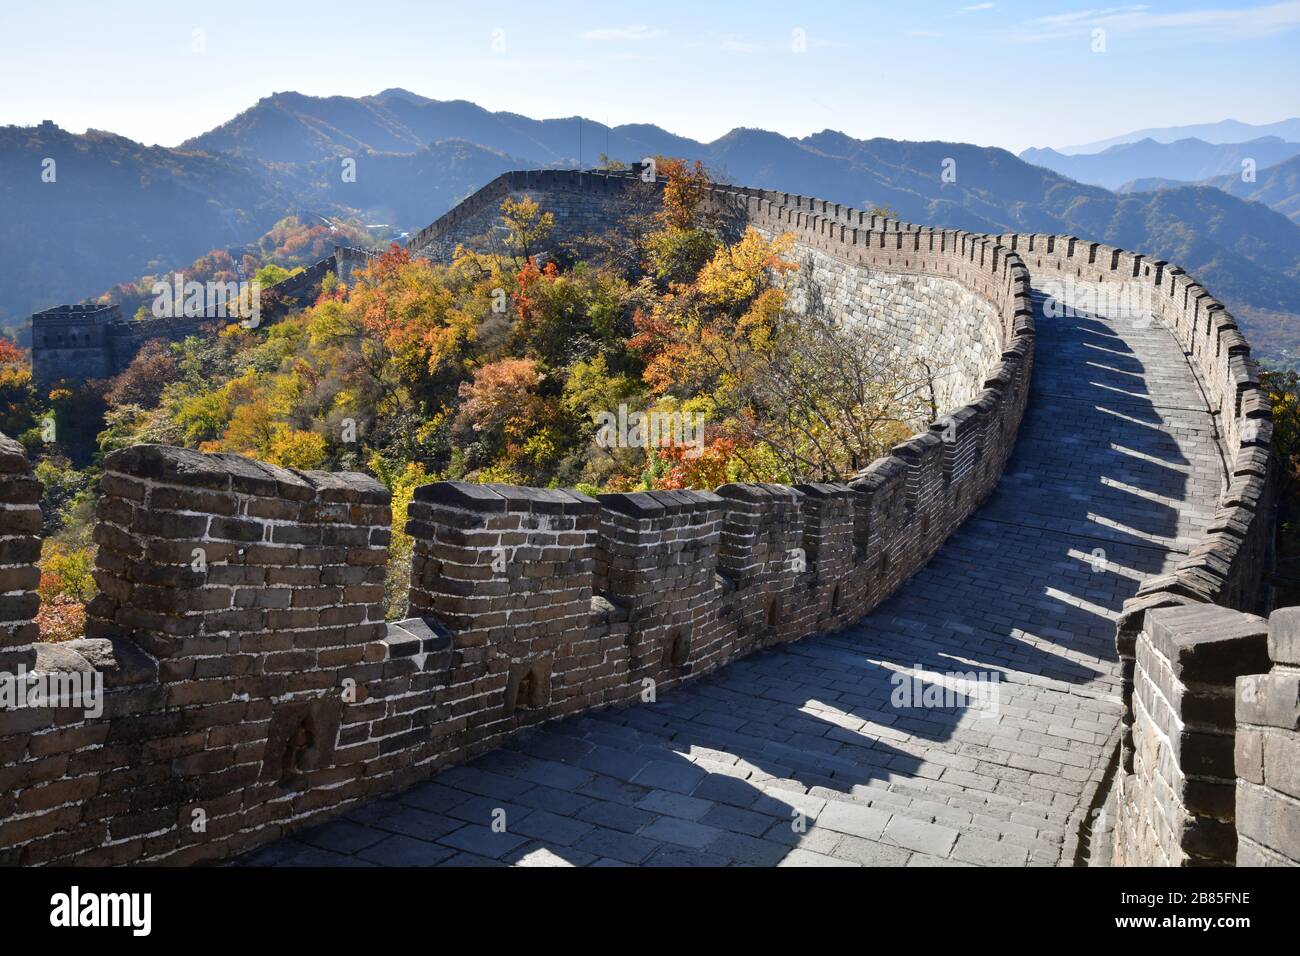 Great Wall Mutianyu during fall with beautiful foliage Stock Photo